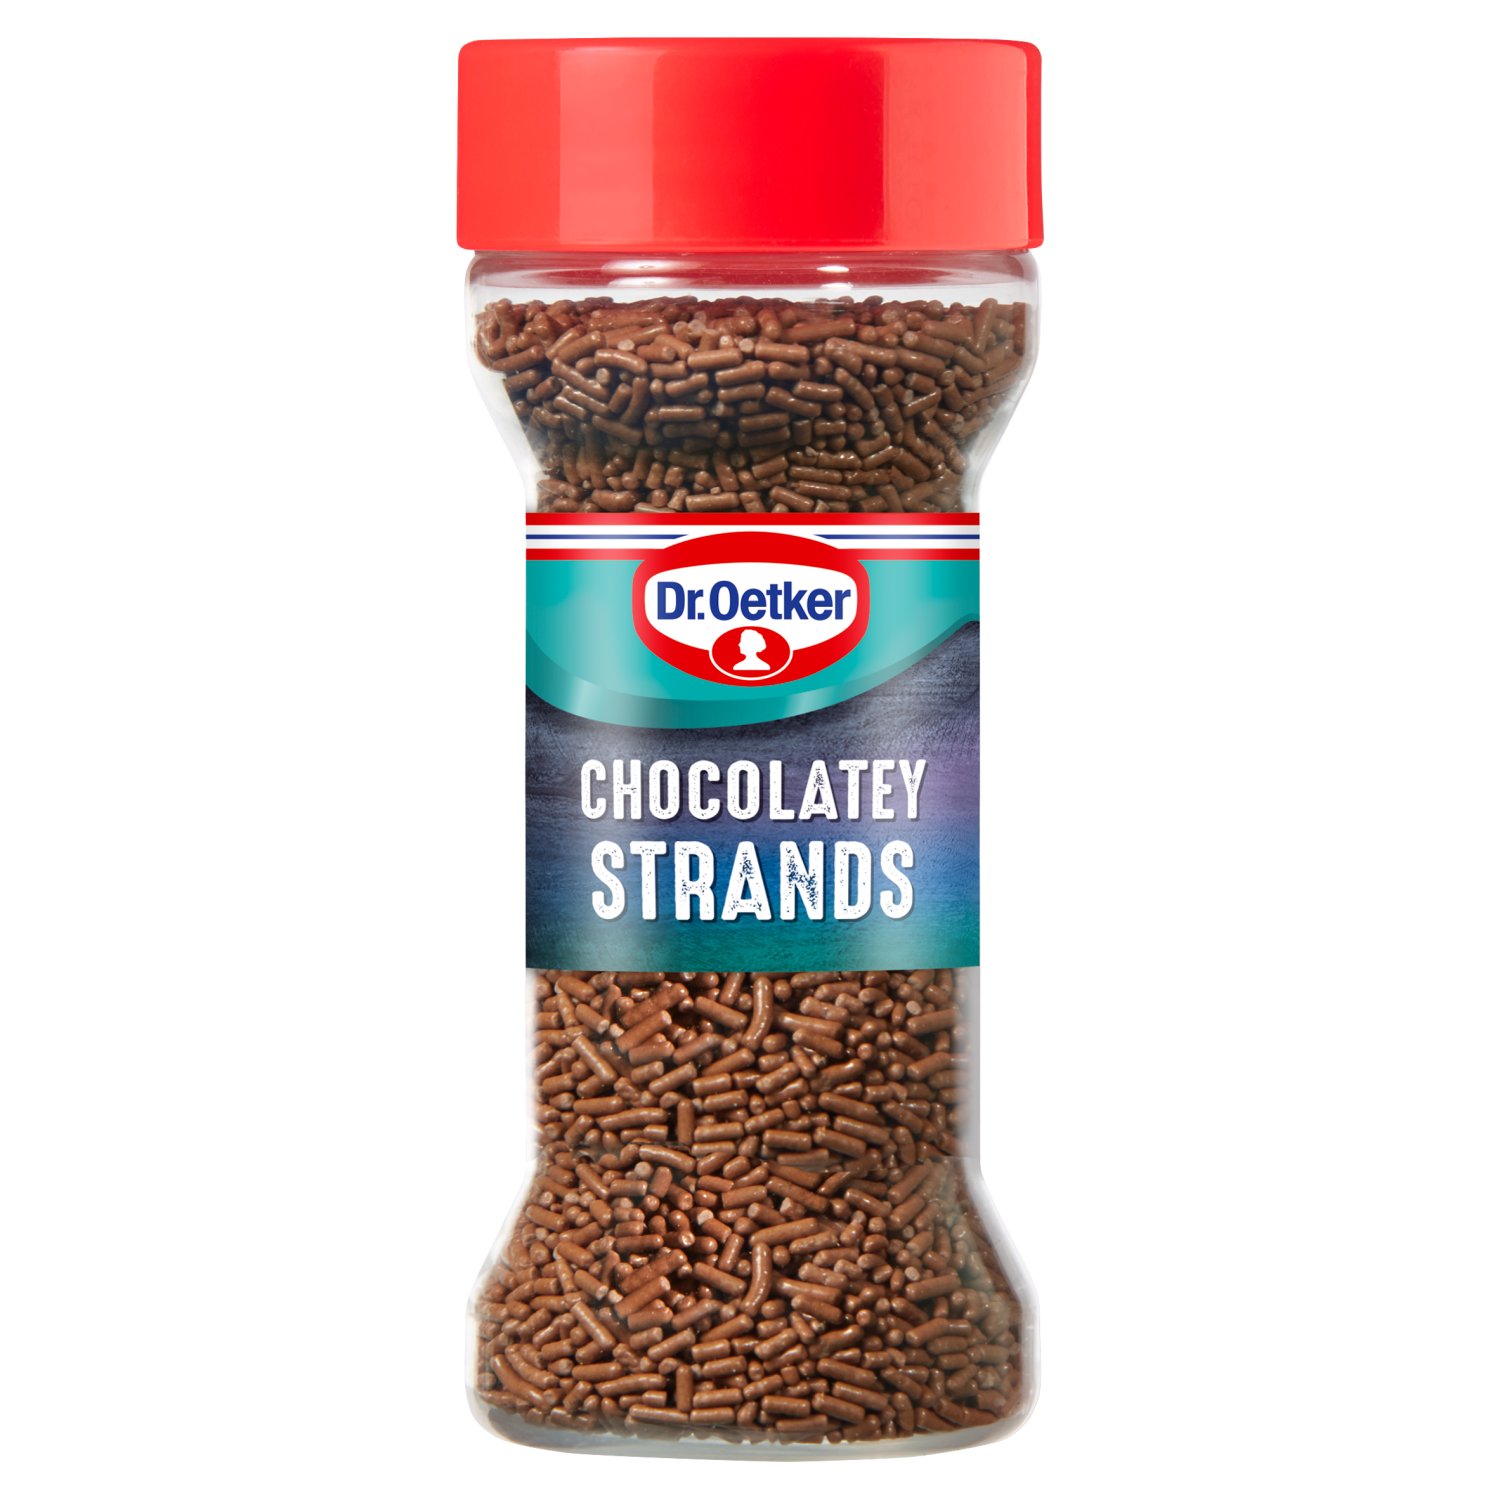 Dr. Oetker Chocolately Strands (55 g)